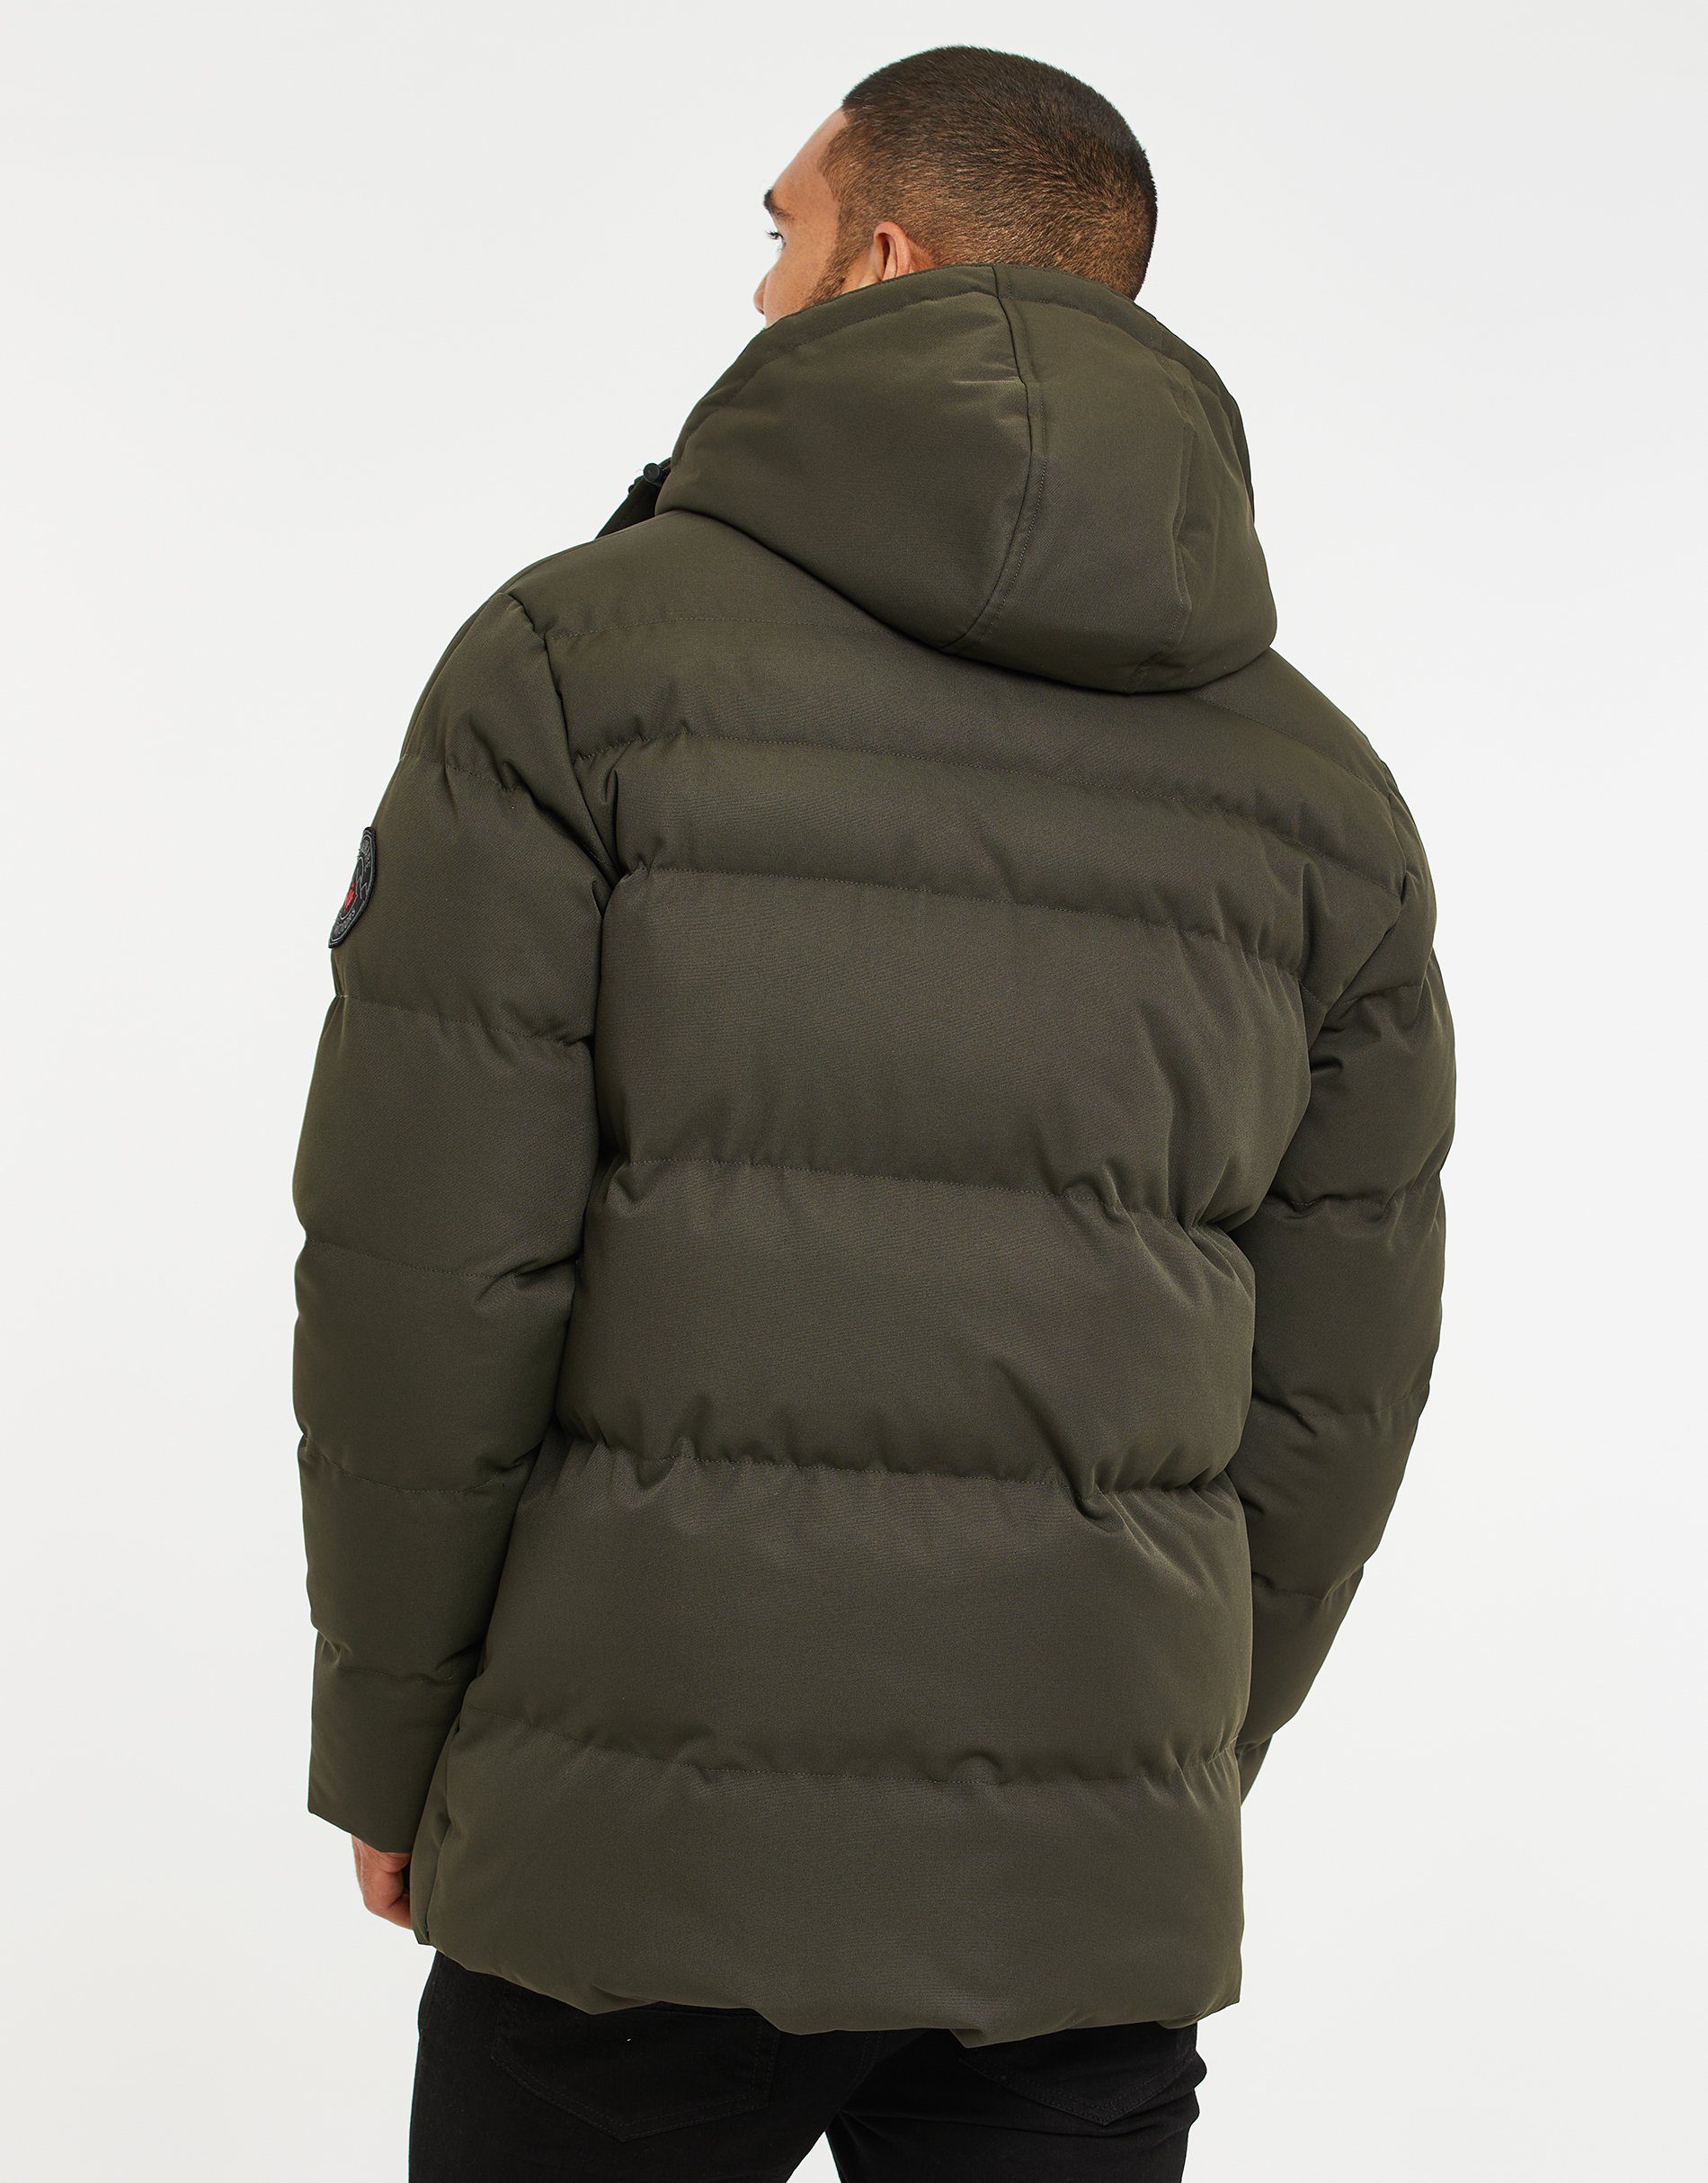 zertifiziert Khaki- Global Jacket Jackton (GRS) Recycled Standard olivgrün Winterjacke THB Threadbare